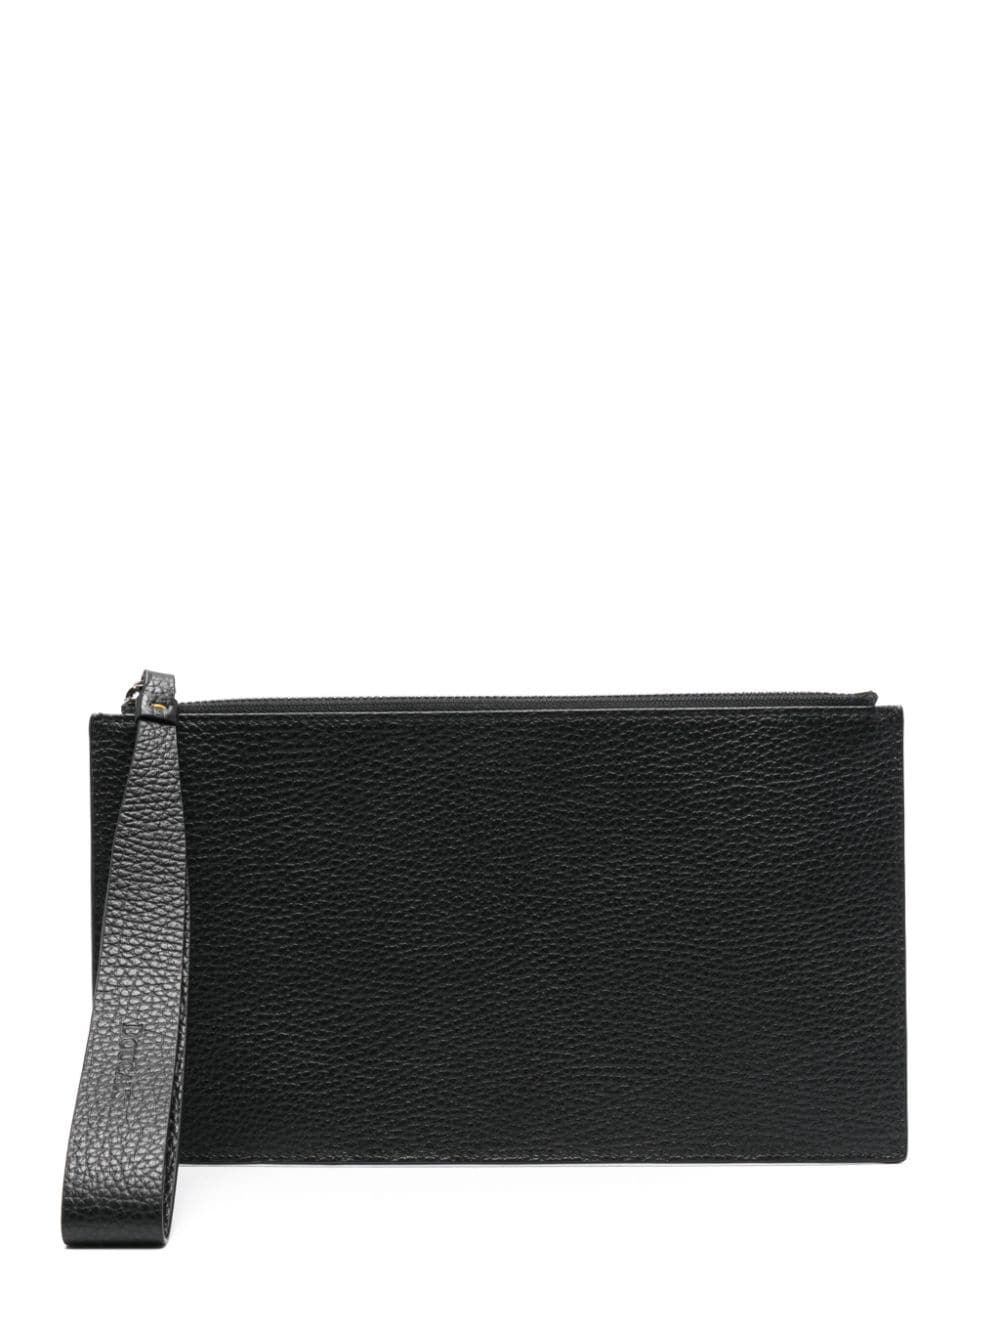 Doucal's grained leather wallet - Black von Doucal's